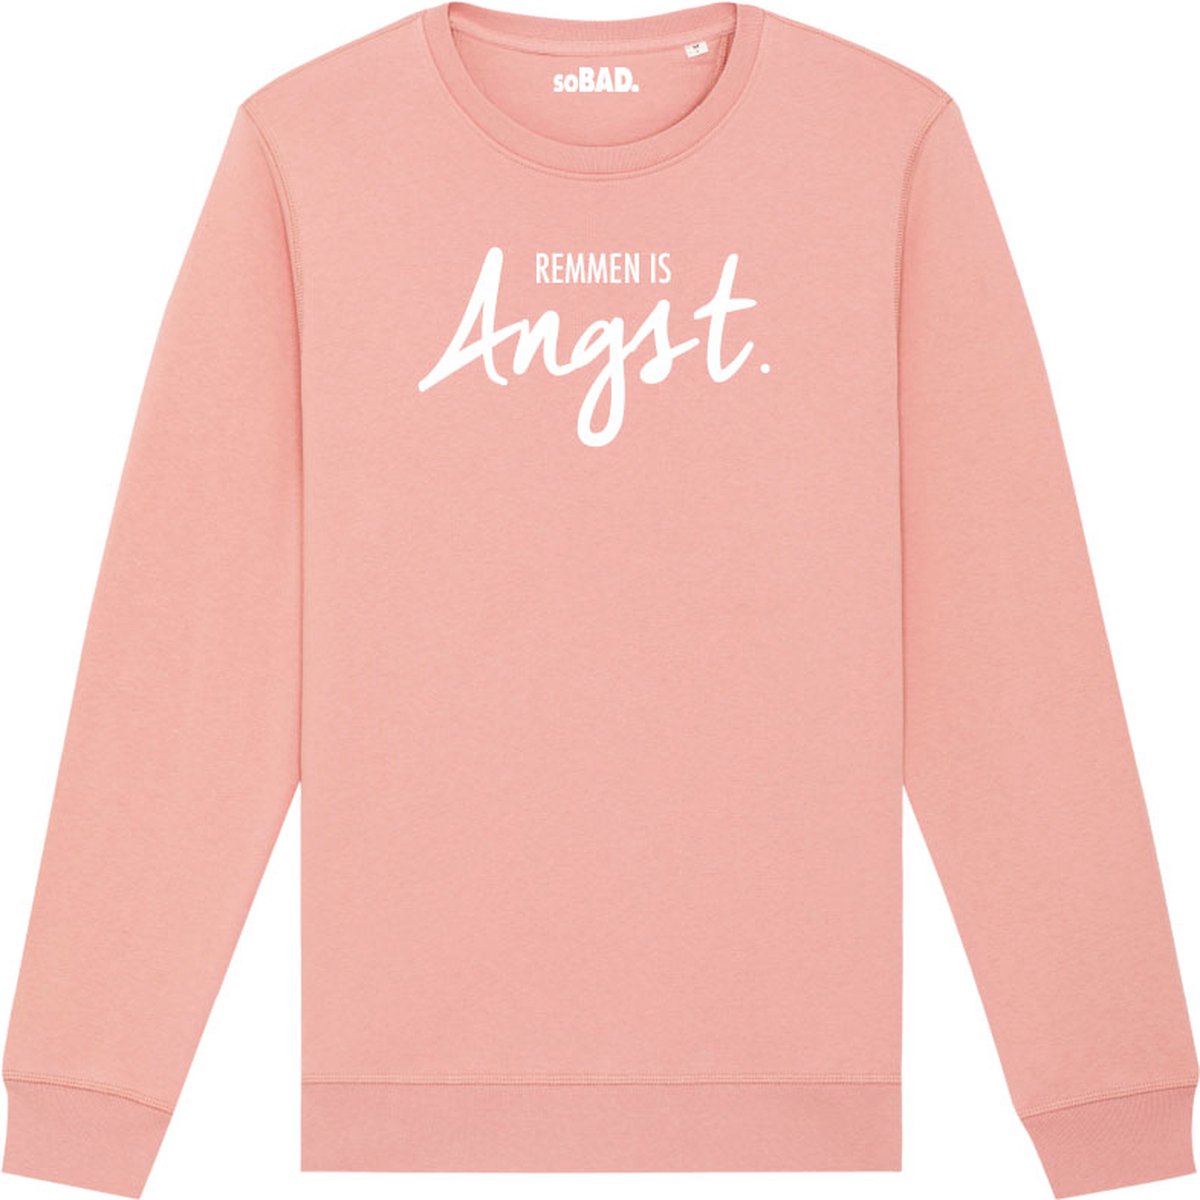 Wintersport sweater canyon pink M - Remmen is Angst - wit - soBAD. | Foute apres ski outfit | kleding | verkleedkleren | wintersporttruien | wintersport dames en heren